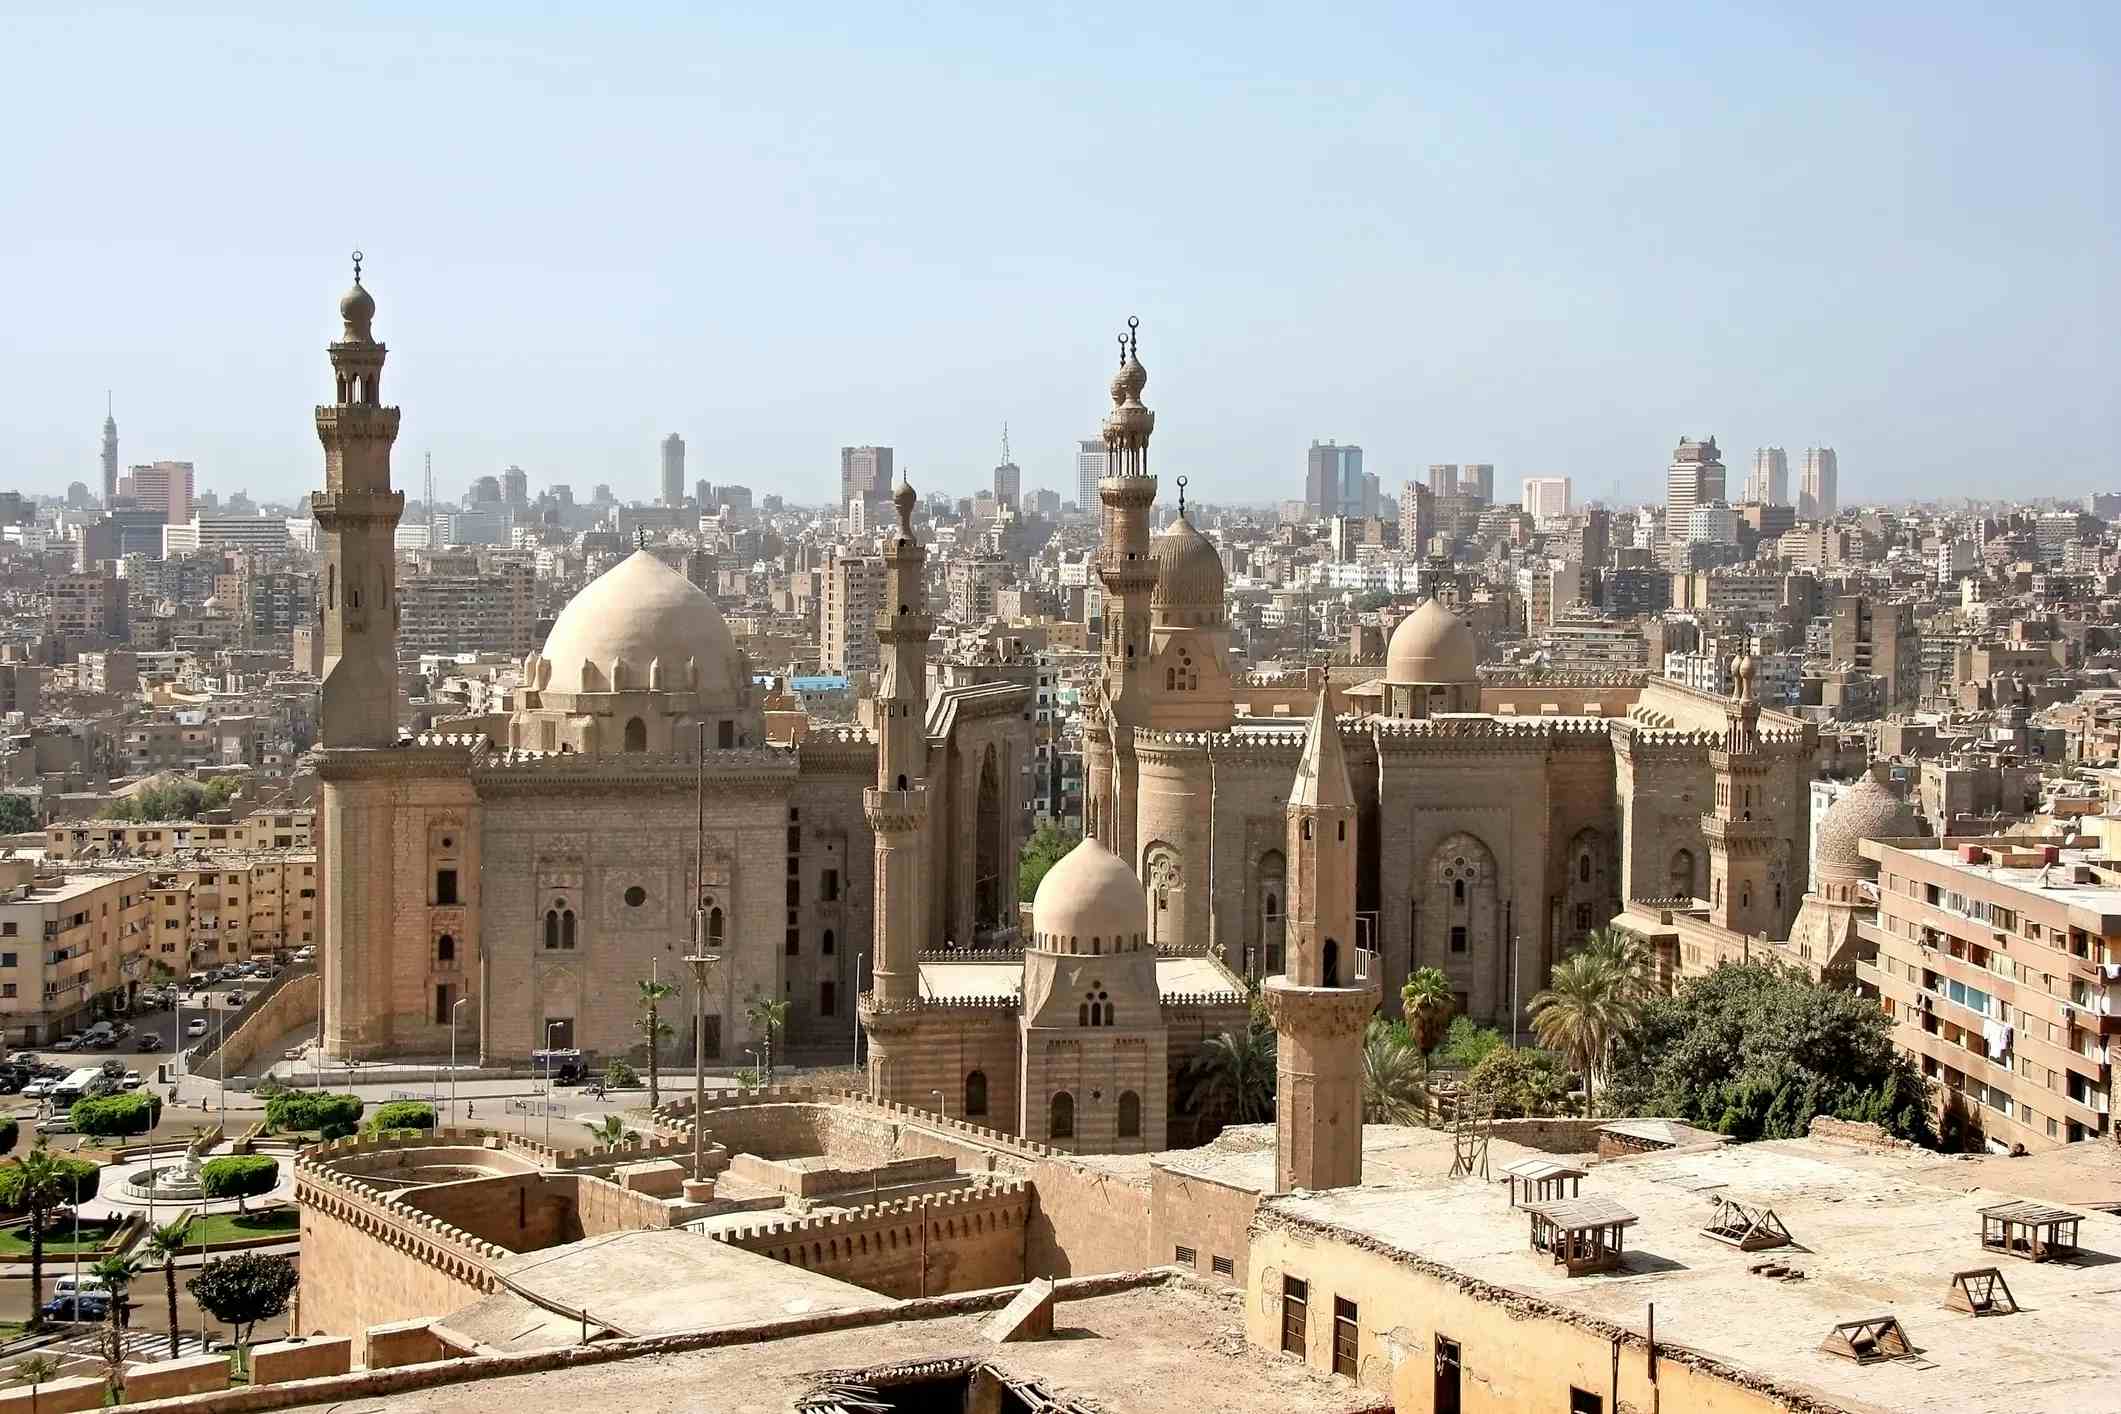 Cairo image